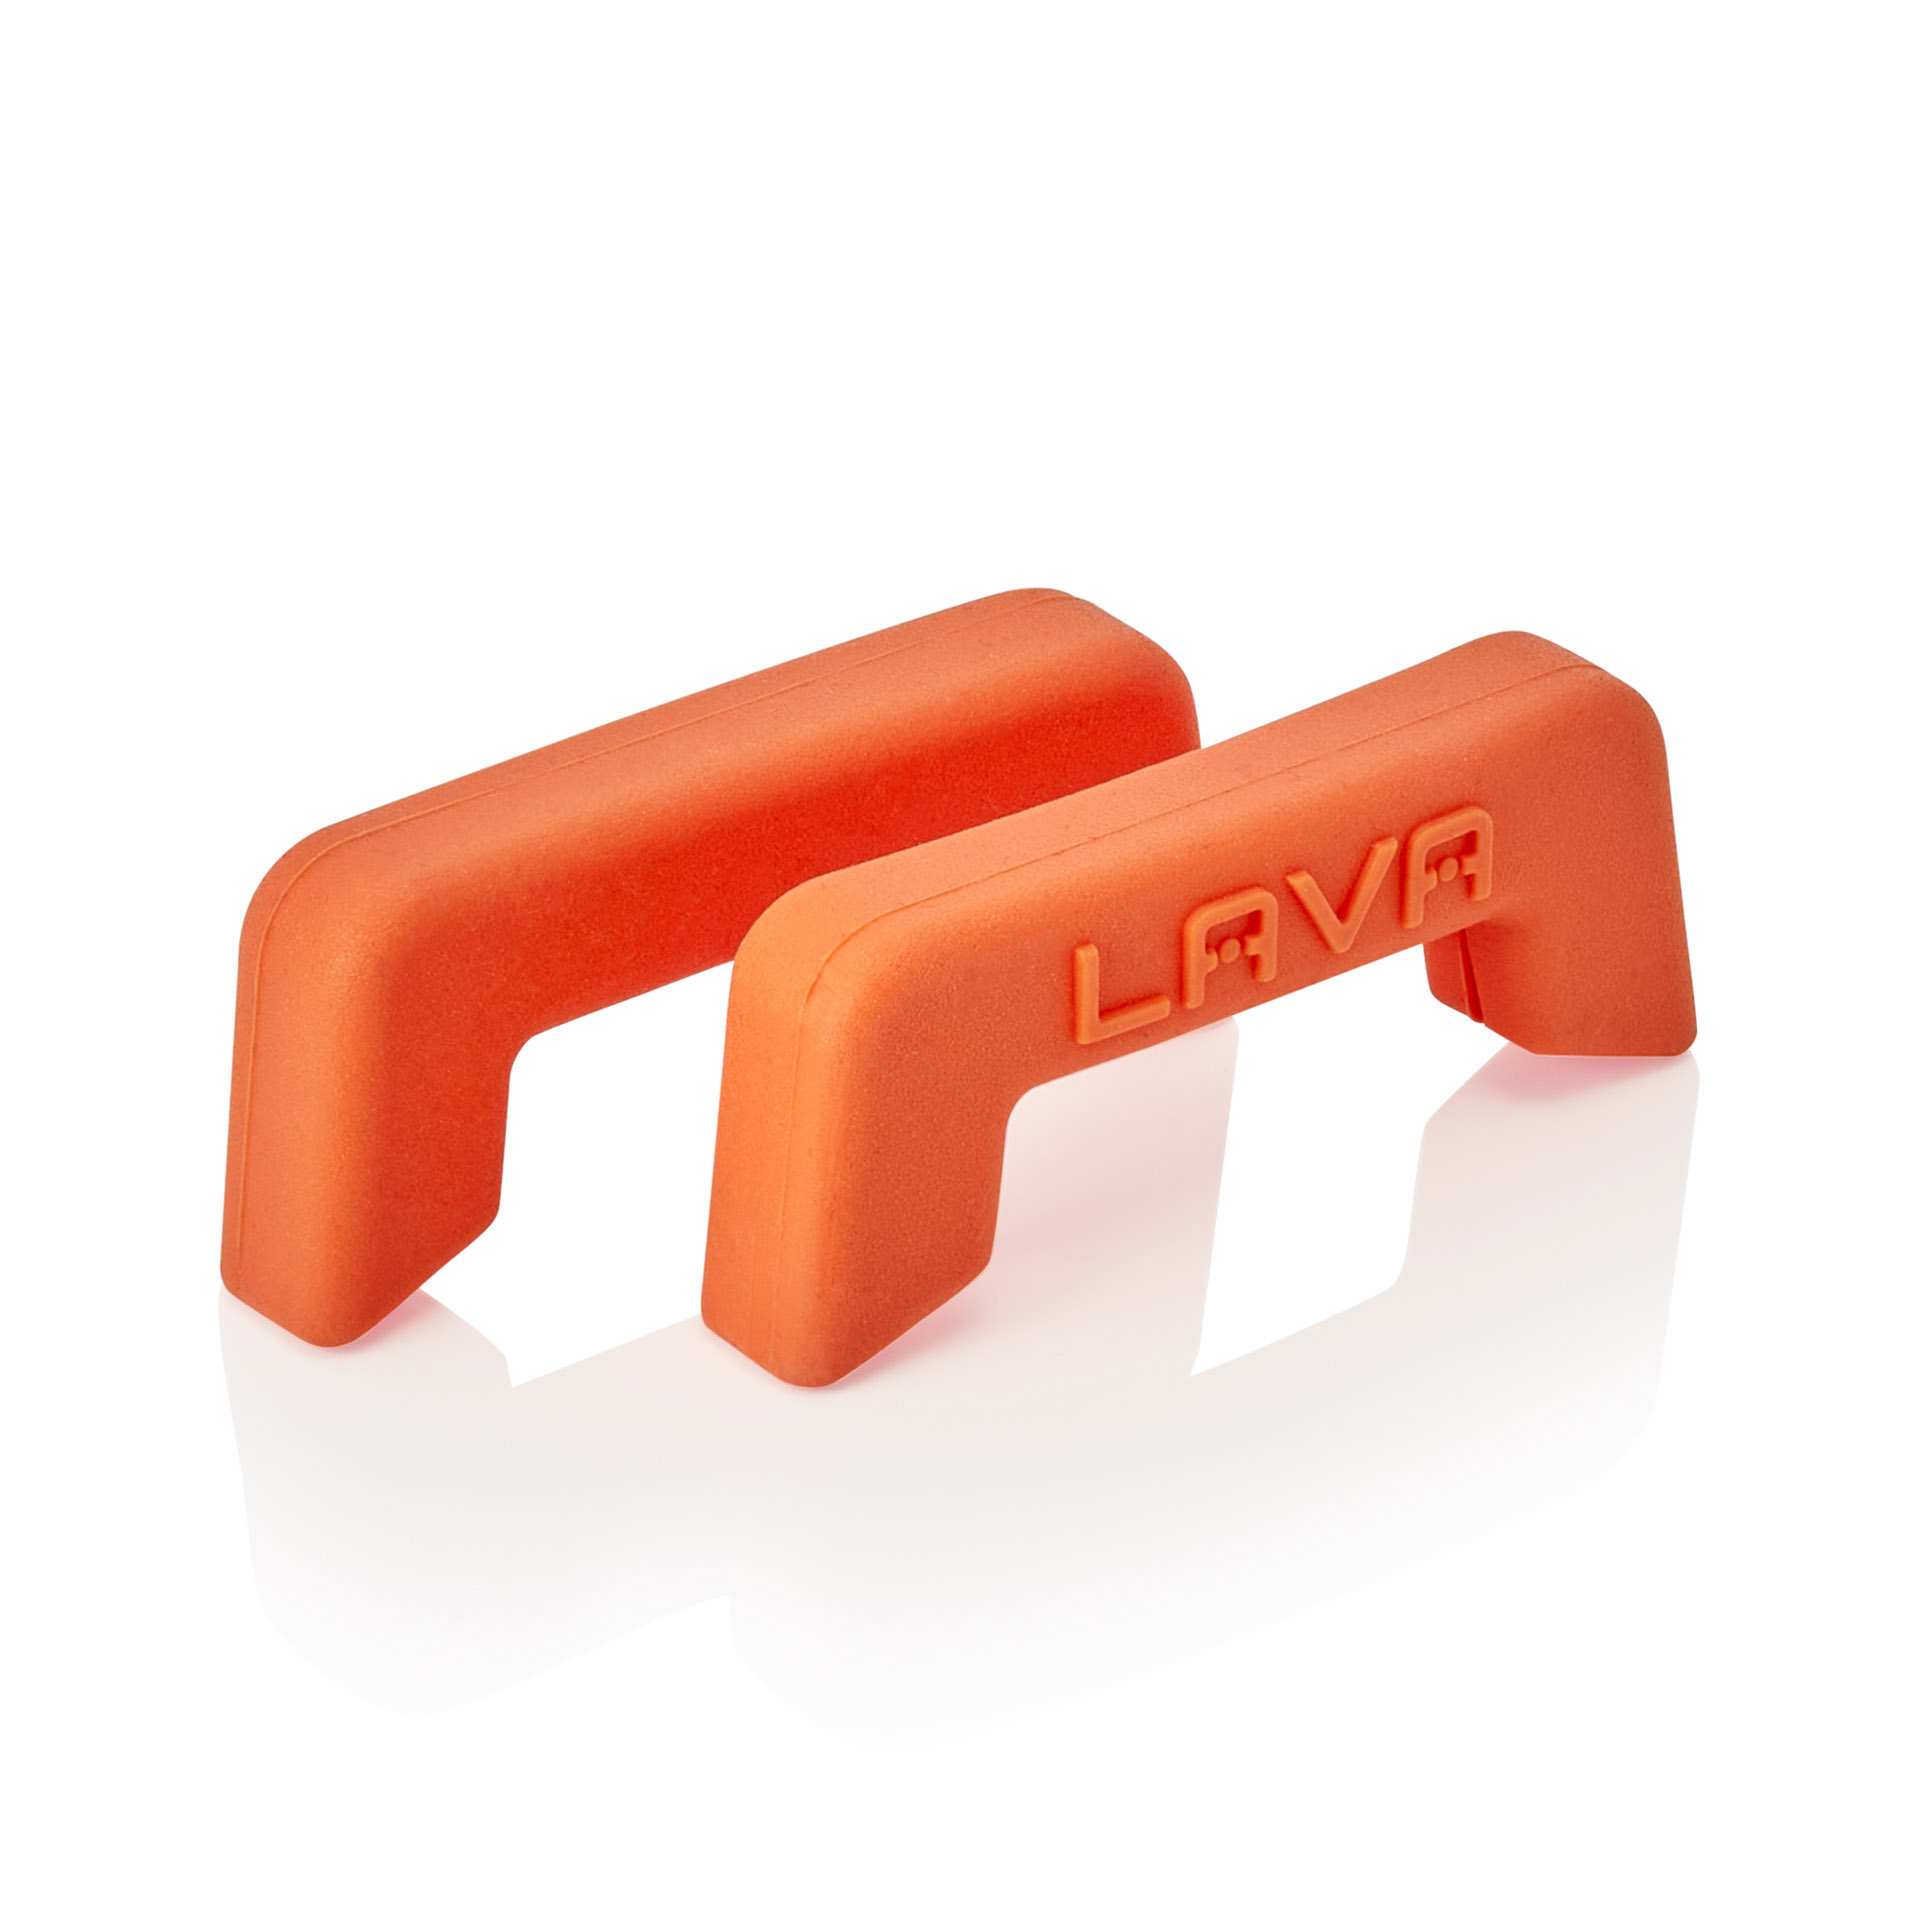 Griff - Serie Lava - orange - Abm. 9,5 x 3,4 x 1,5 cm - Silikon - 364701001-A